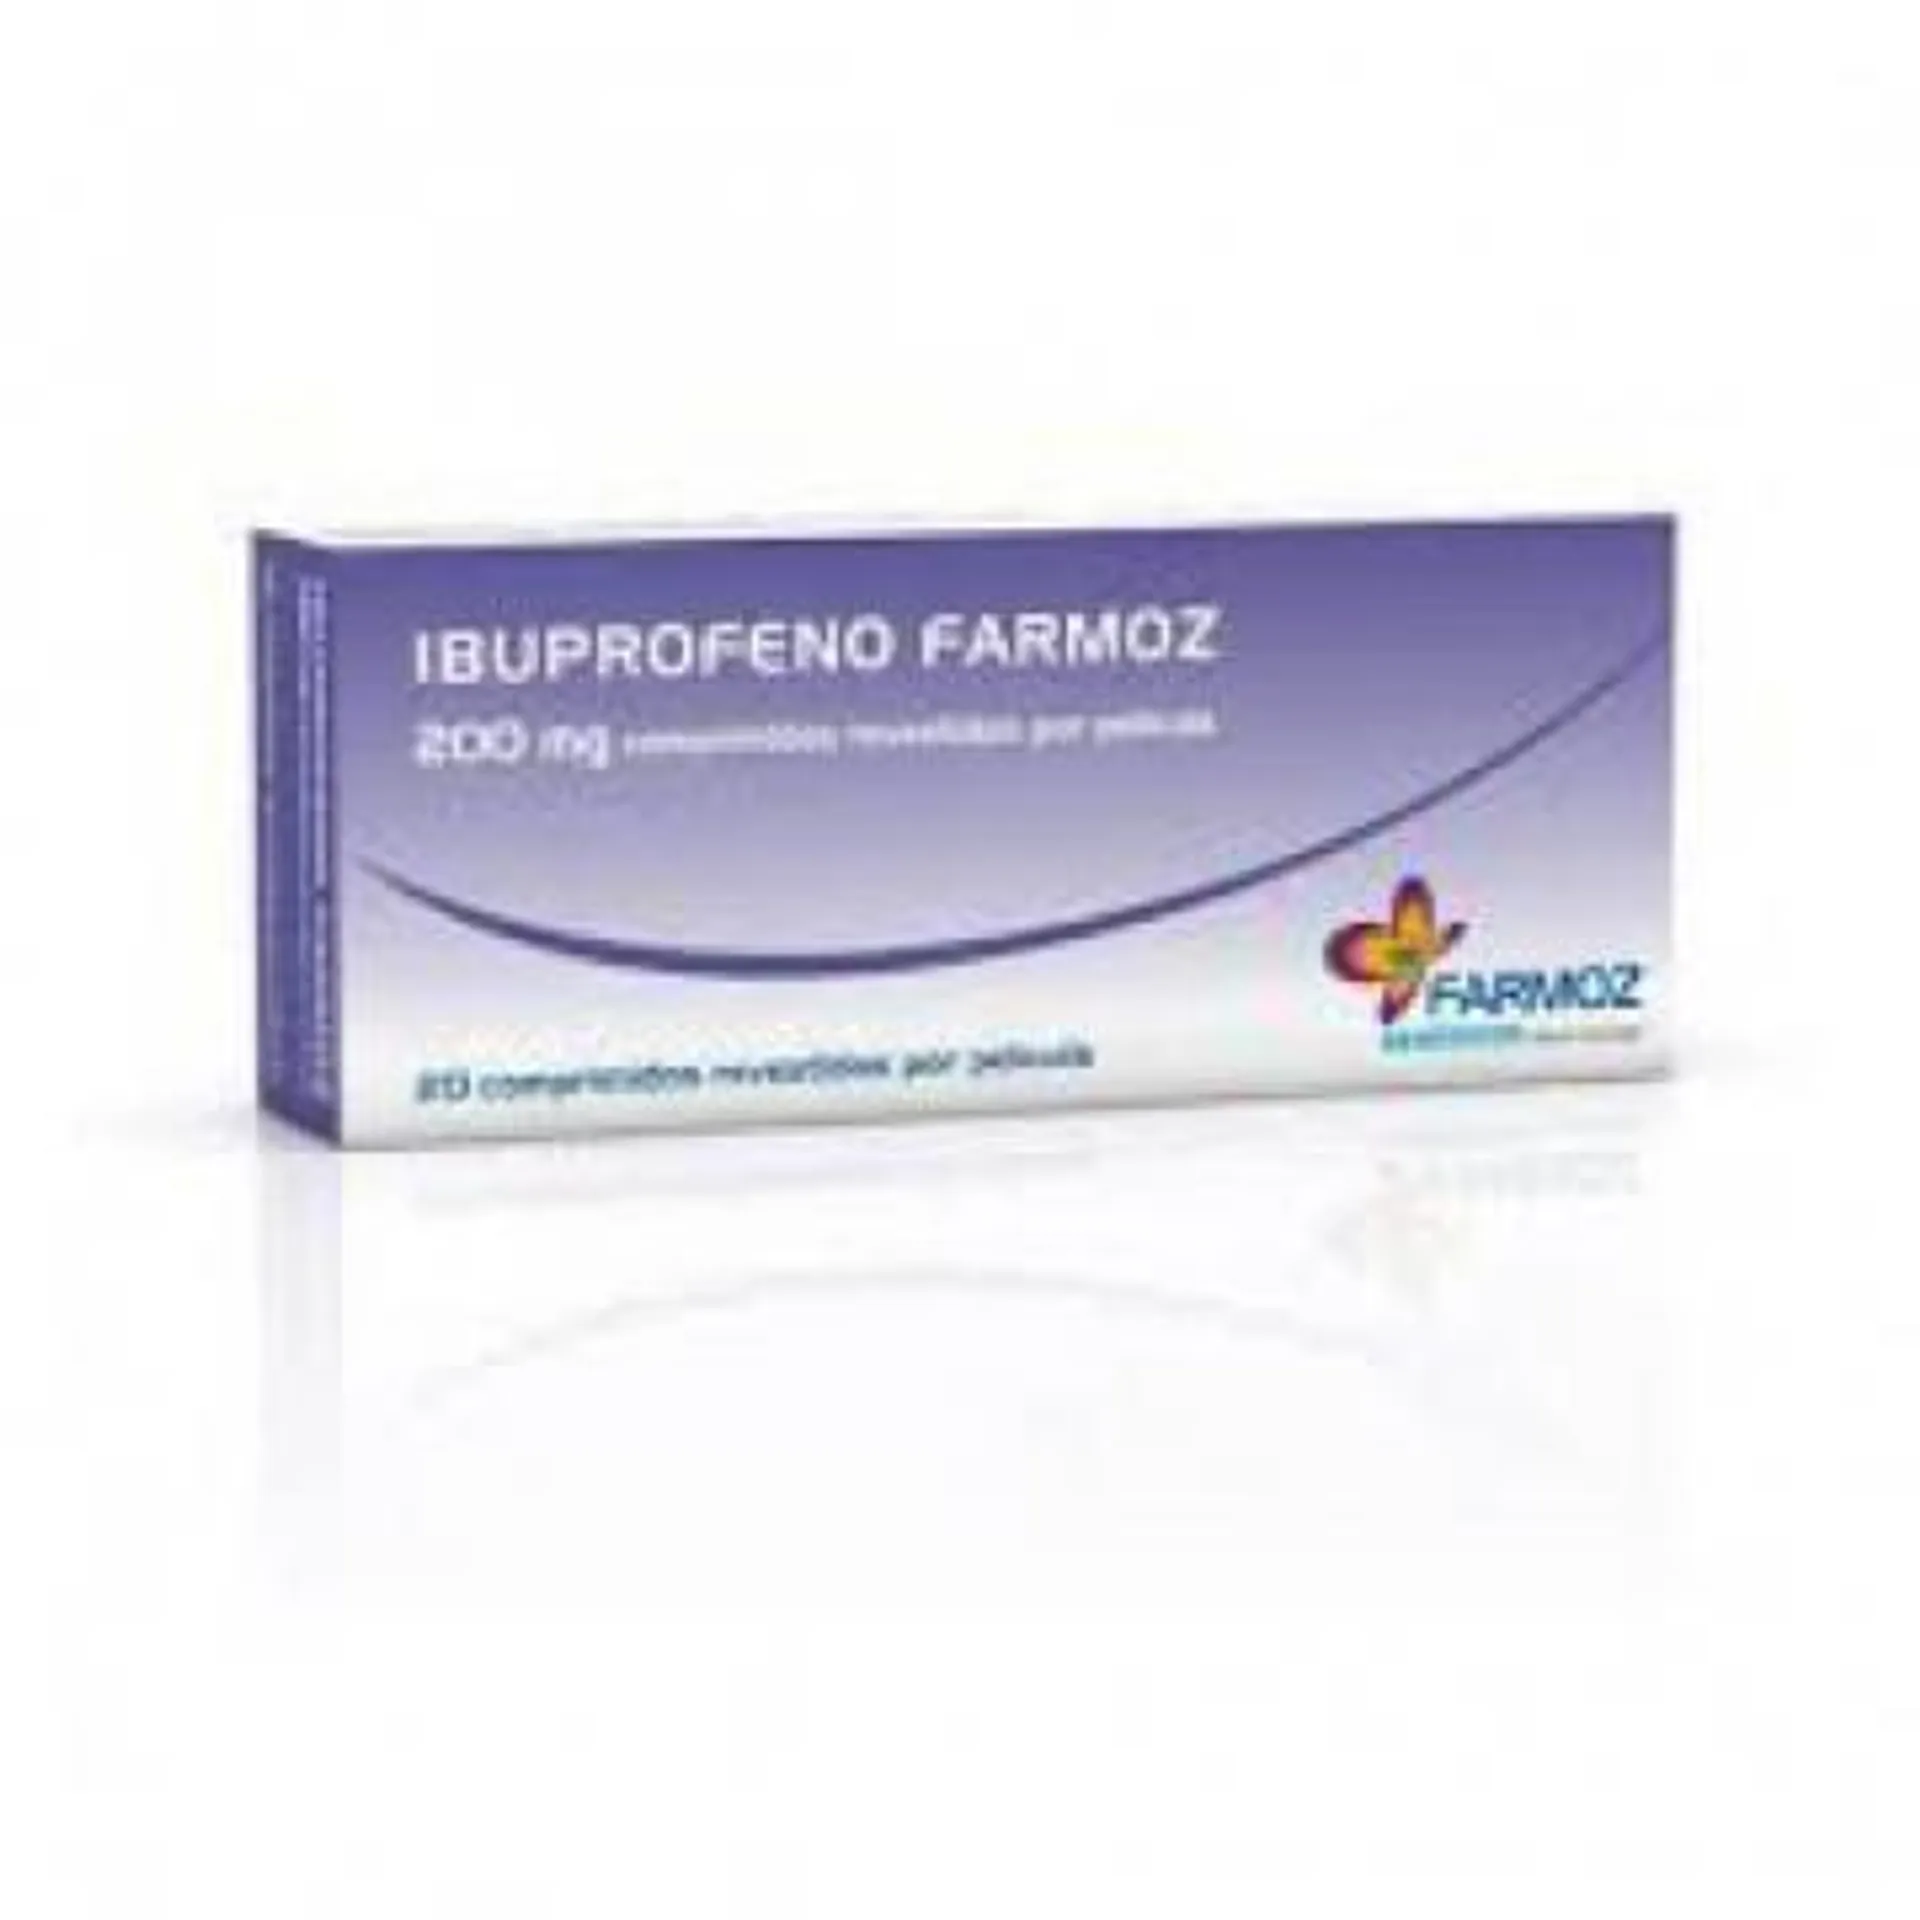 Ibuprofeno Farmoz, 400 mg x 20 comp revest